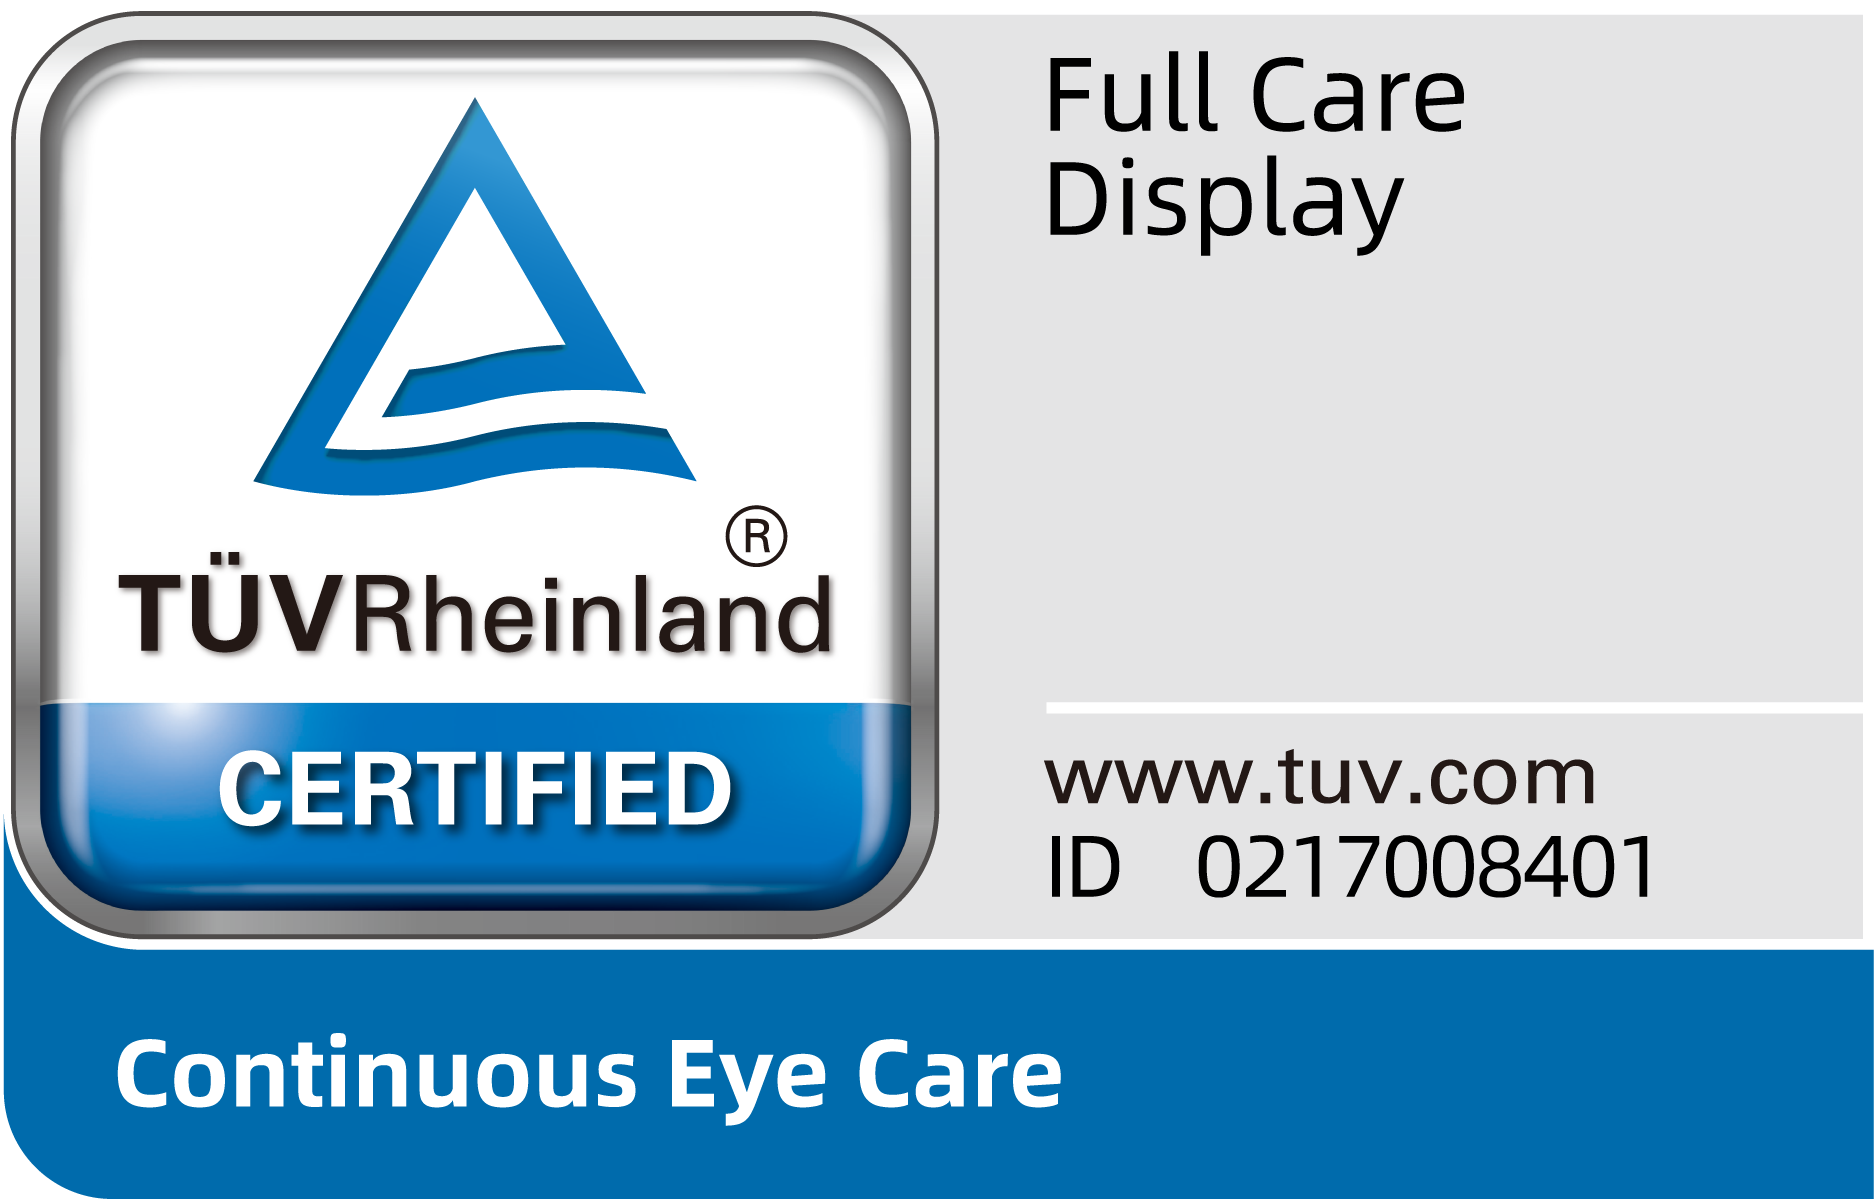 Certifikácia TÜV Rheinland Full Care Display. 1